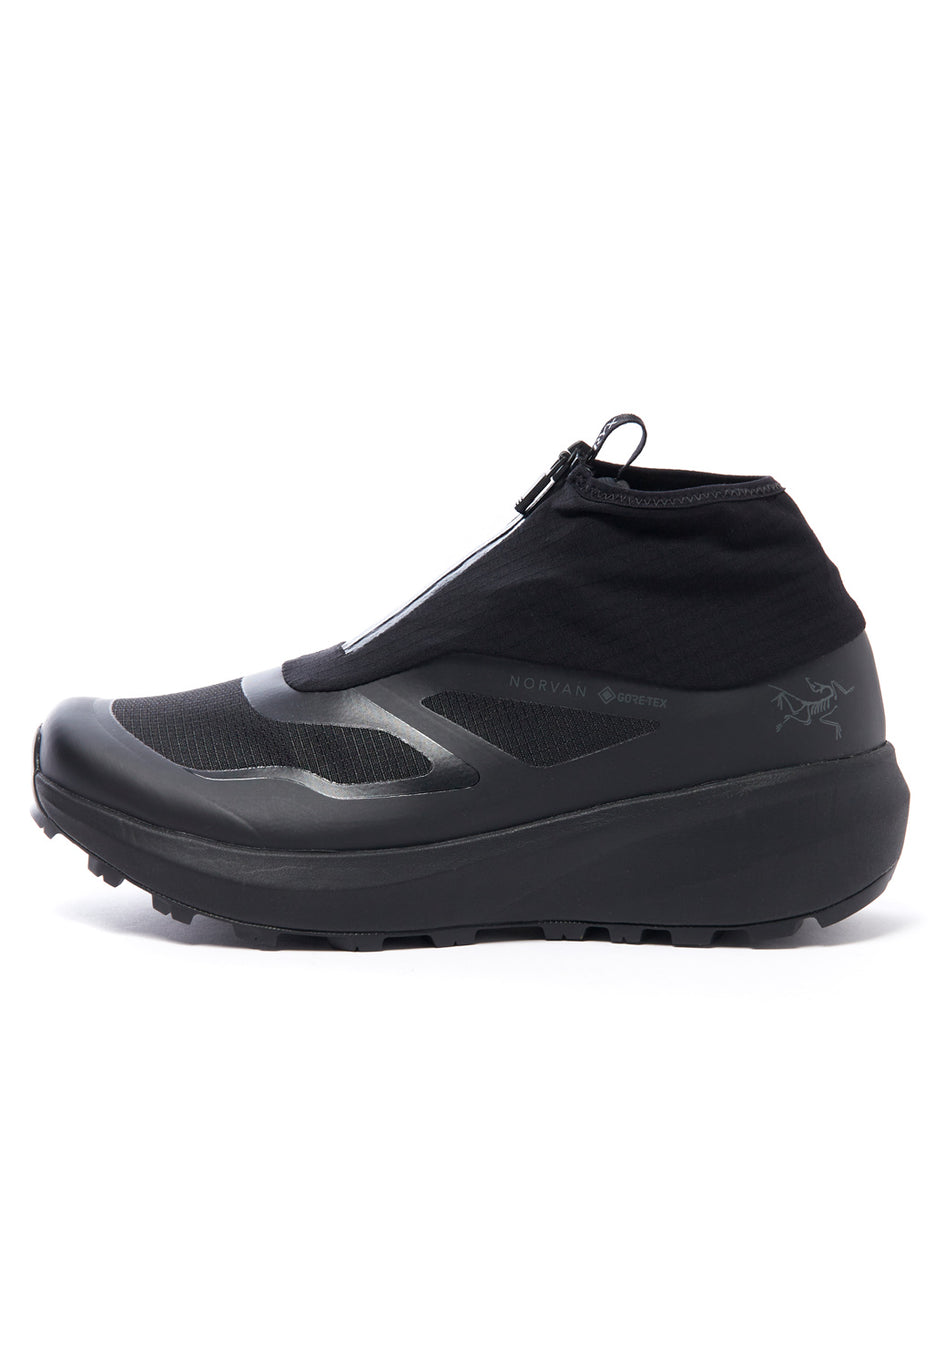 Arc'teryx Norvan Nivalis GTX Shoes - Black/Black